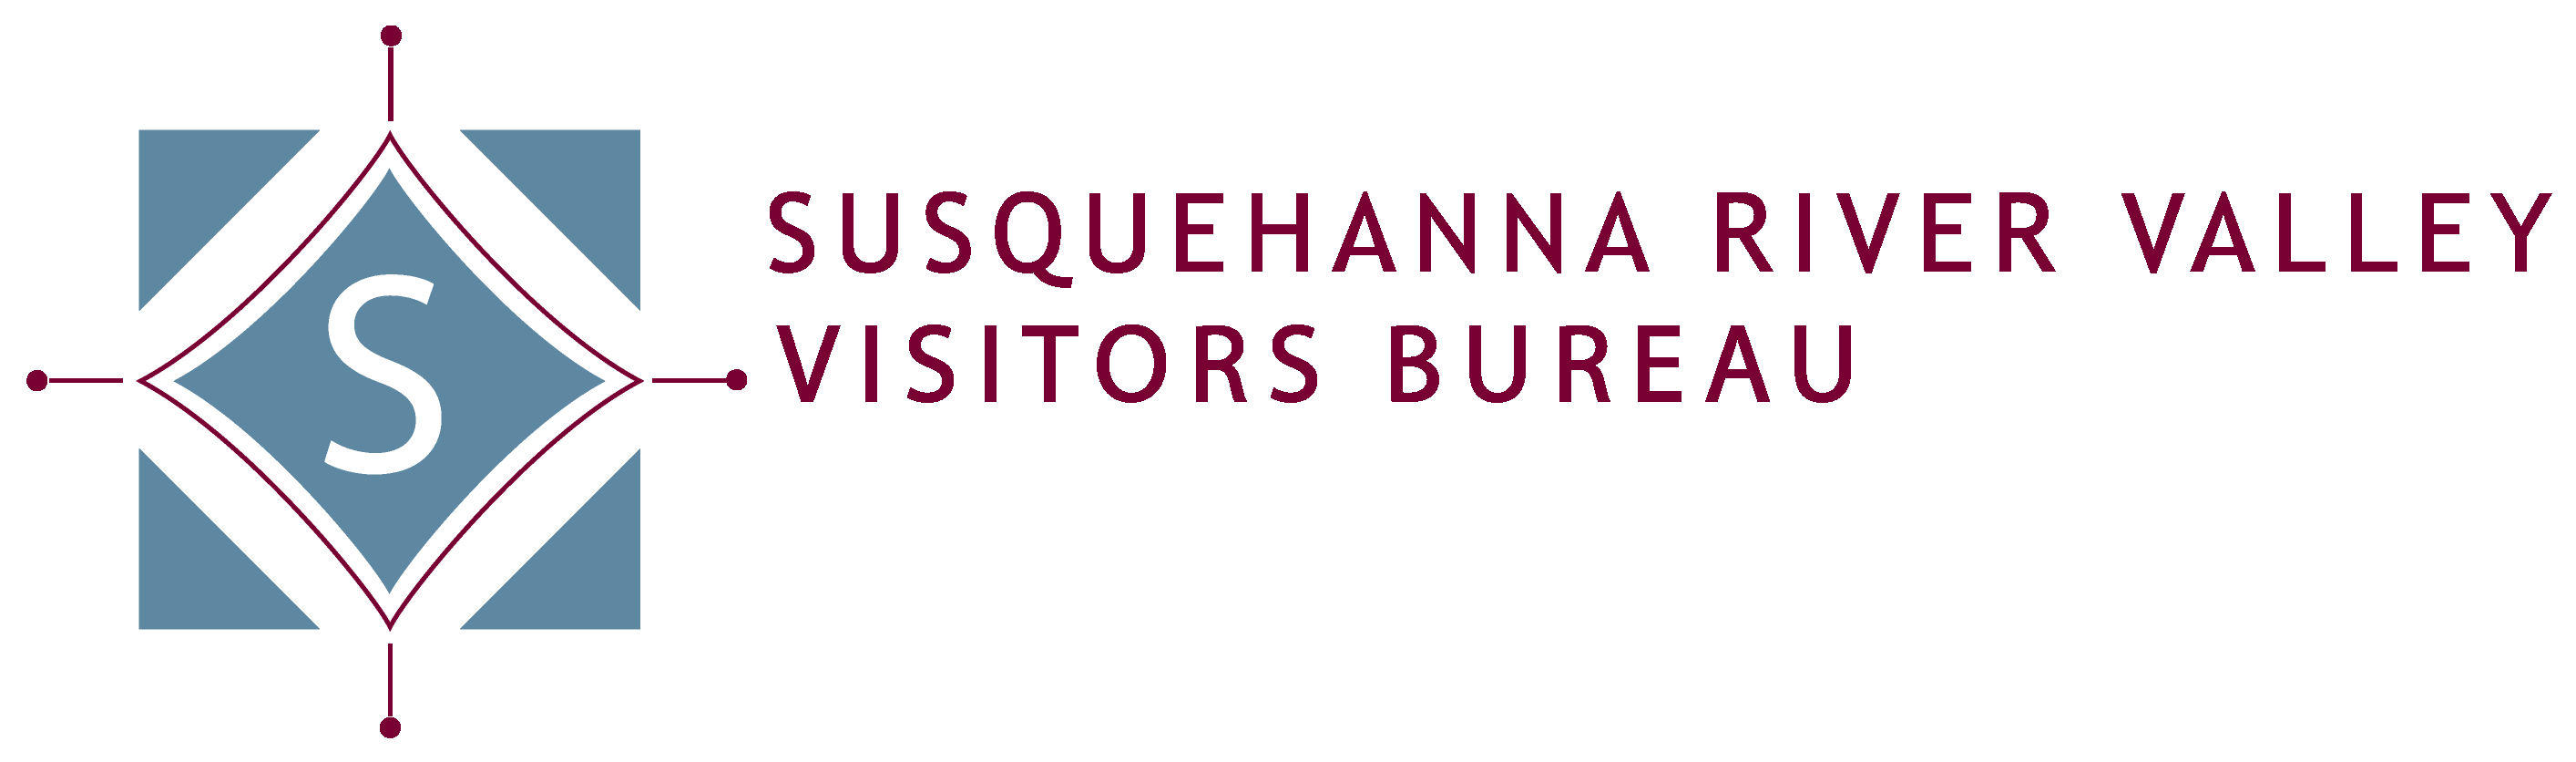 Susquehanna River Valley Visitors Bureau